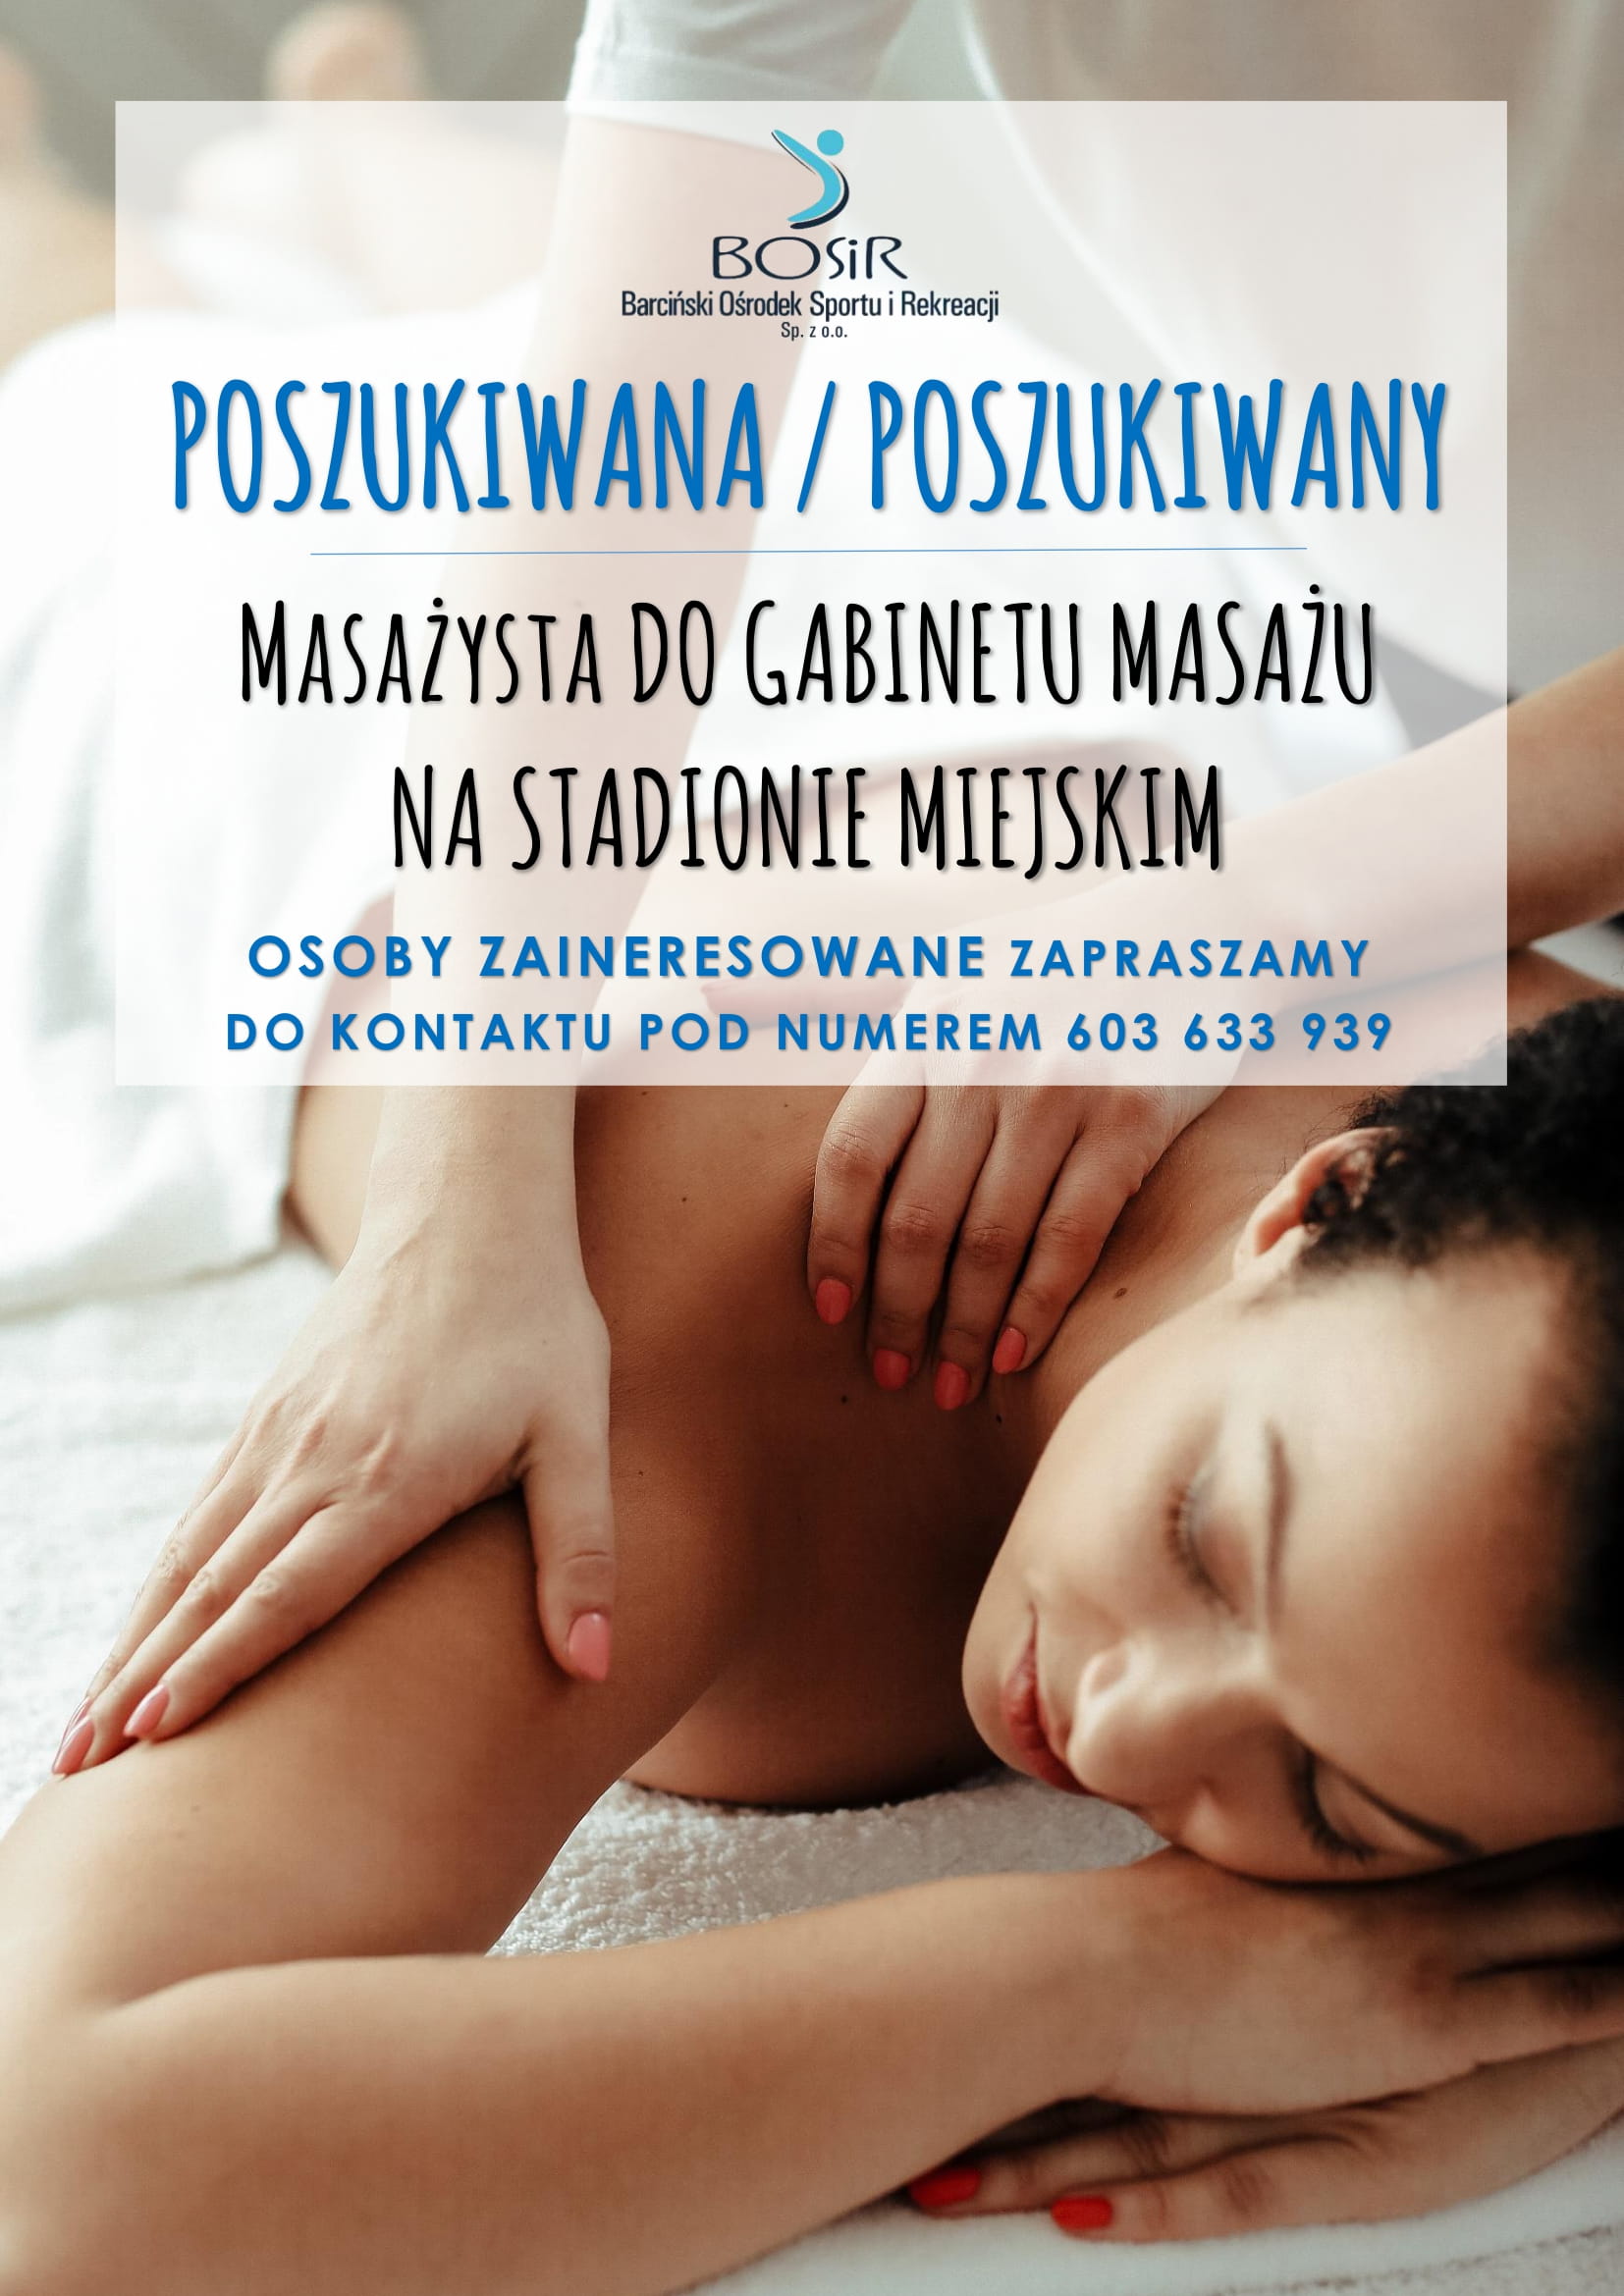 You are currently viewing Poszukiwana/ poszukiwany masażysta!